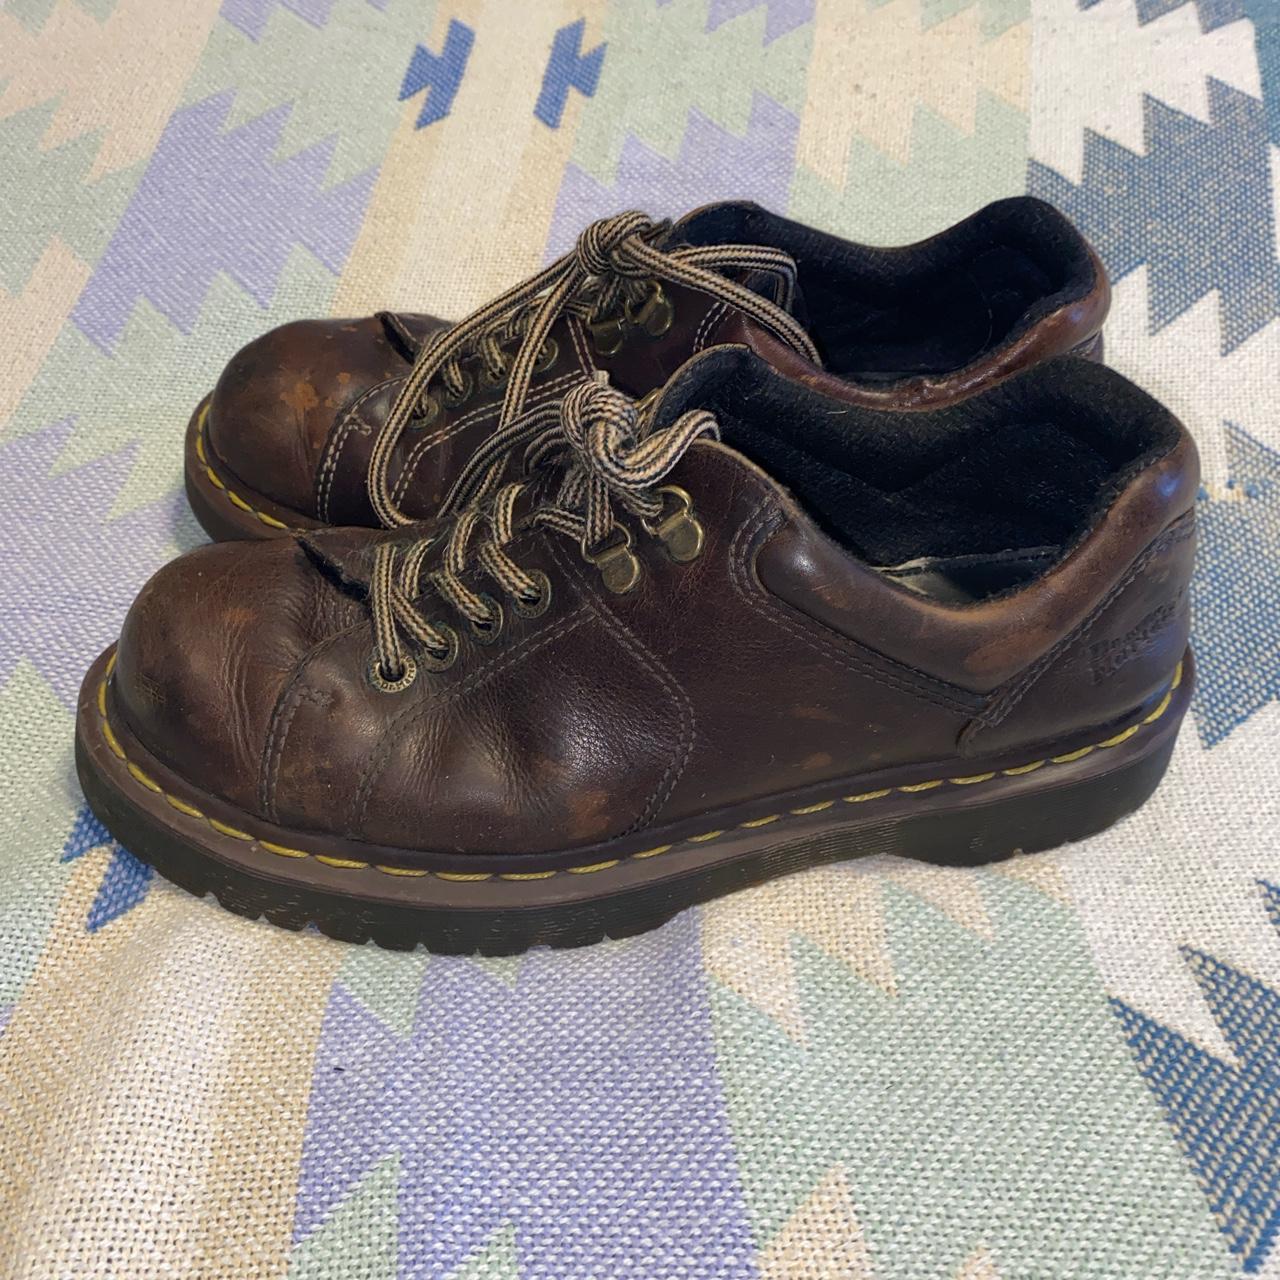 Dr. Martens Men's Brown and Tan Boots | Depop